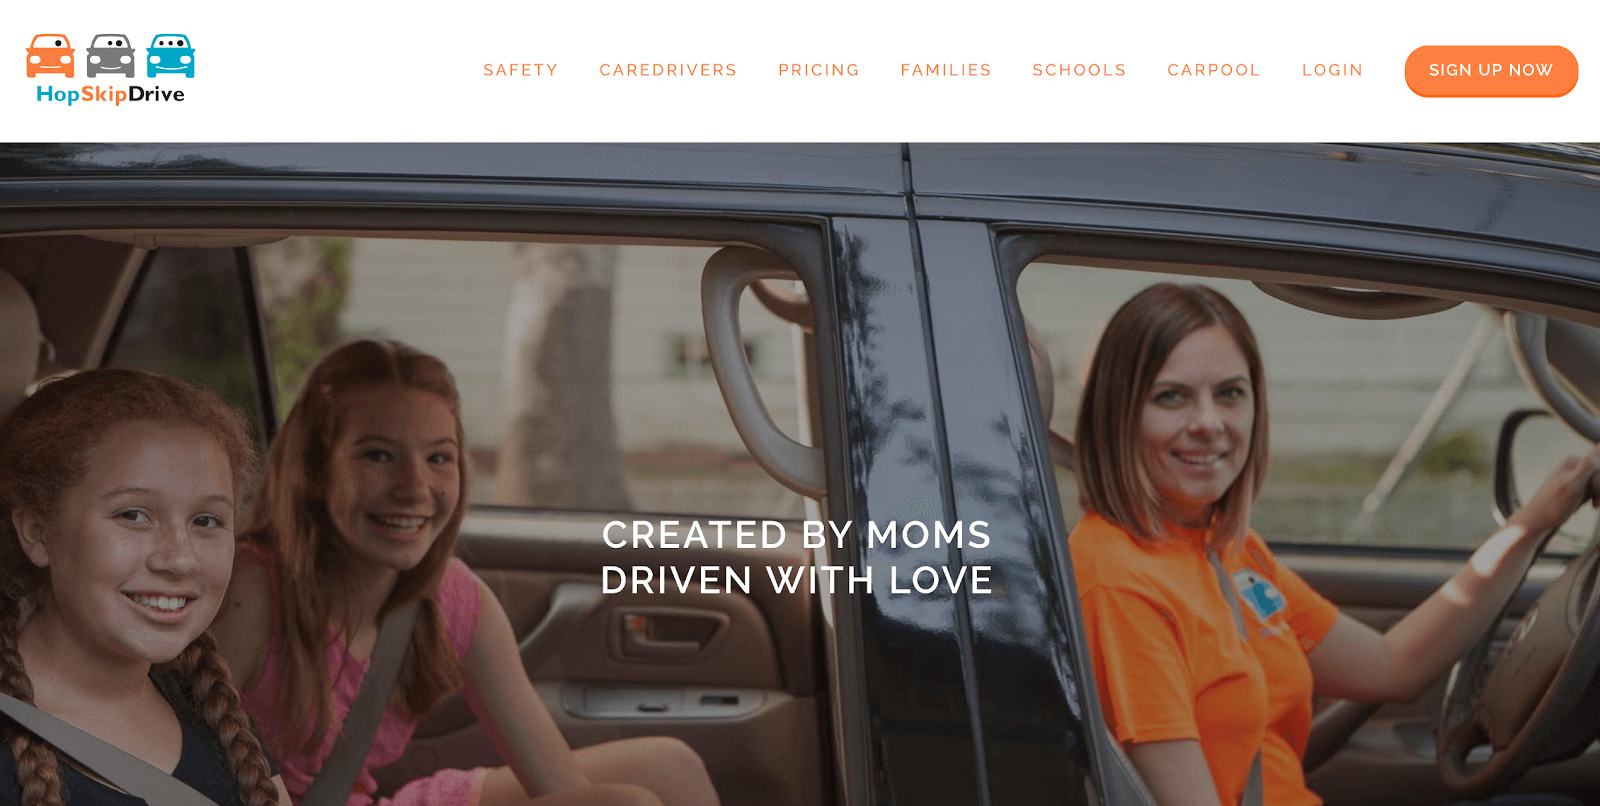 Uber for Kids: HopSkipDrive